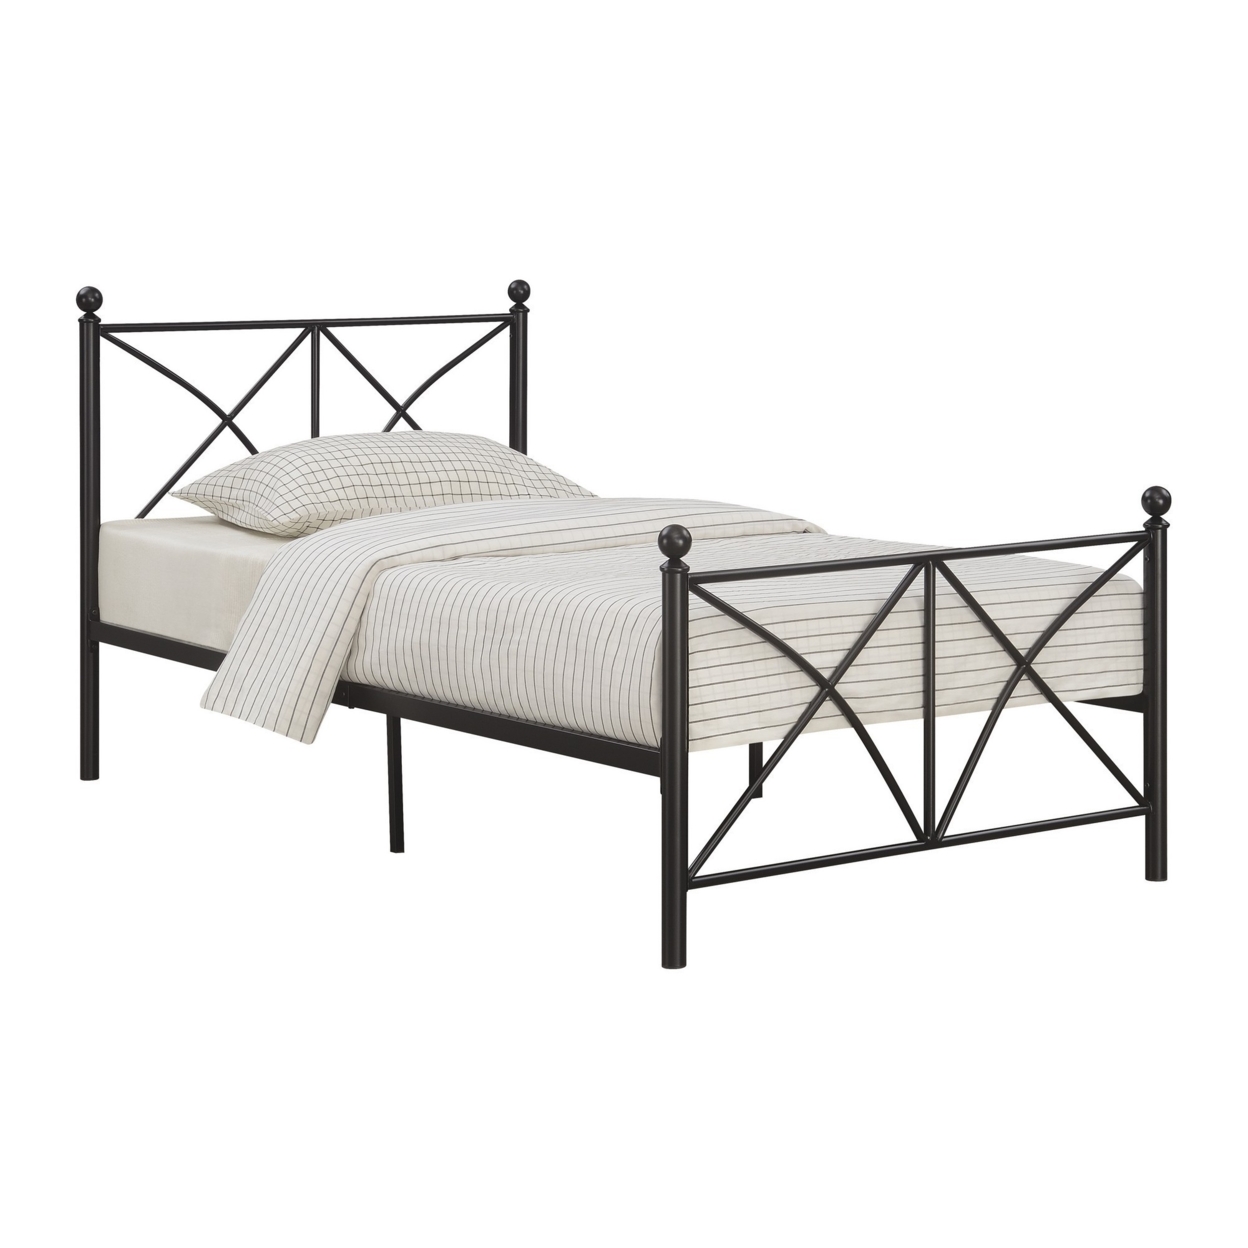 Adam 79 Inch Metal Twin Size Bed Frame, Crossed Bars, Matte Black